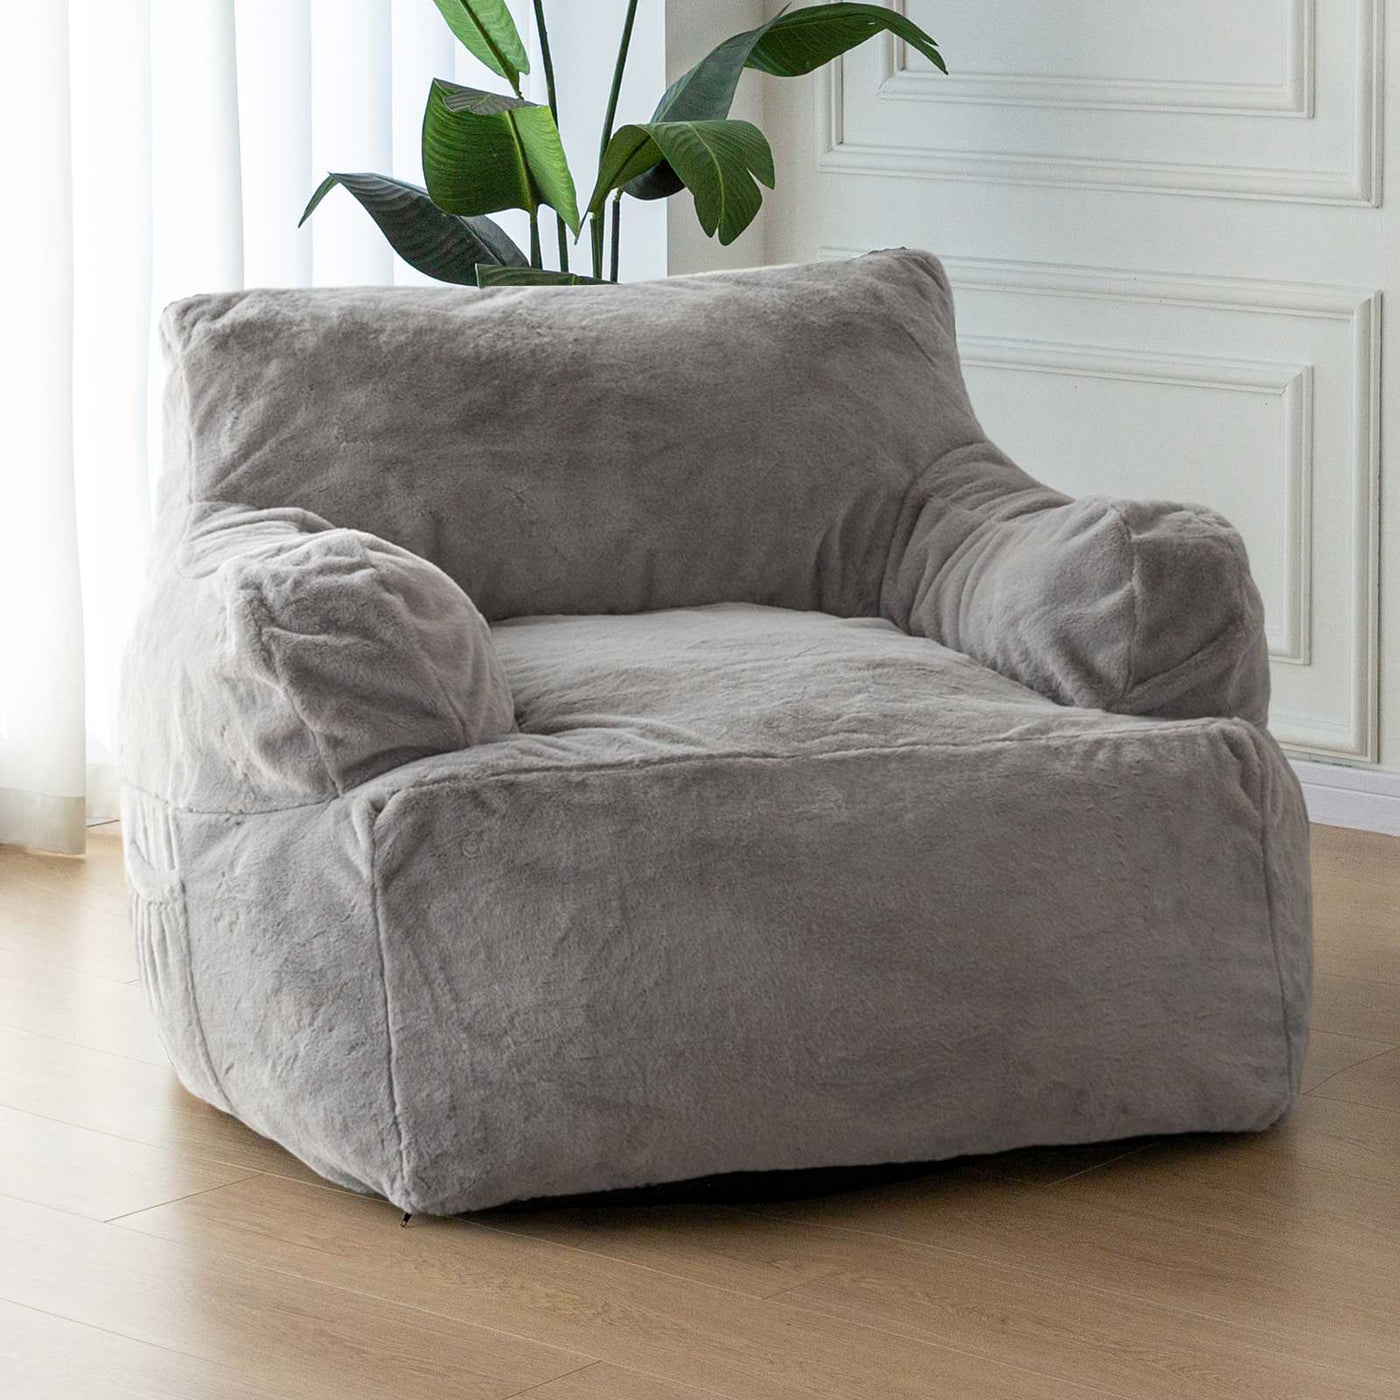 MAXYOYO Giant Bean Bag Chair, Faux Fur Stuffed Bean Bag Couch for Living Room, Grey